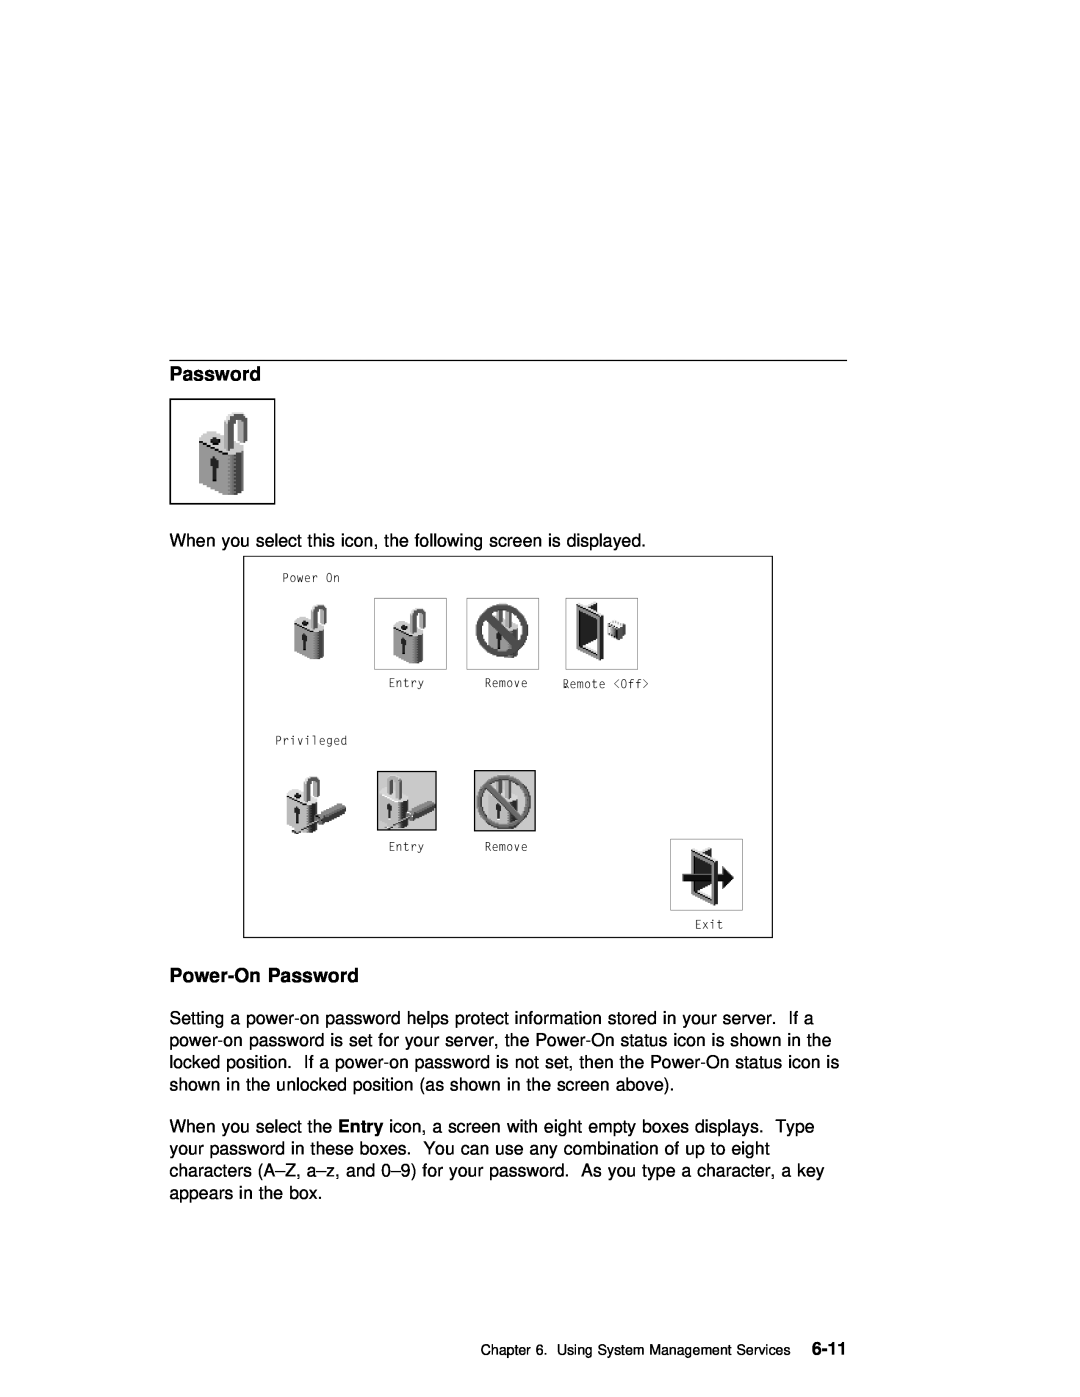 IBM B50 manual Power-On Password, 6-11 